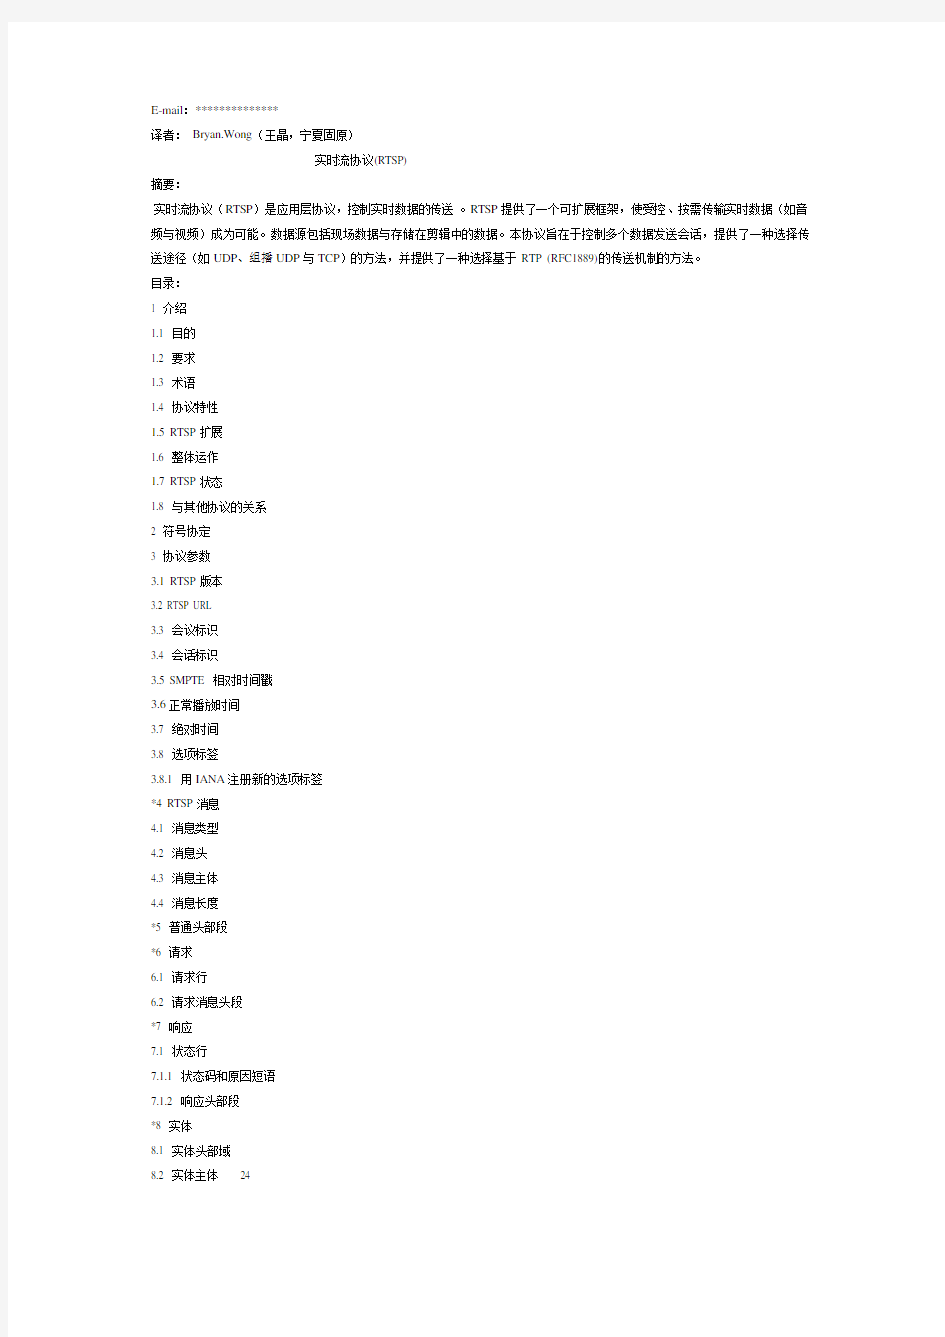 RTSP_rfc2326中文版